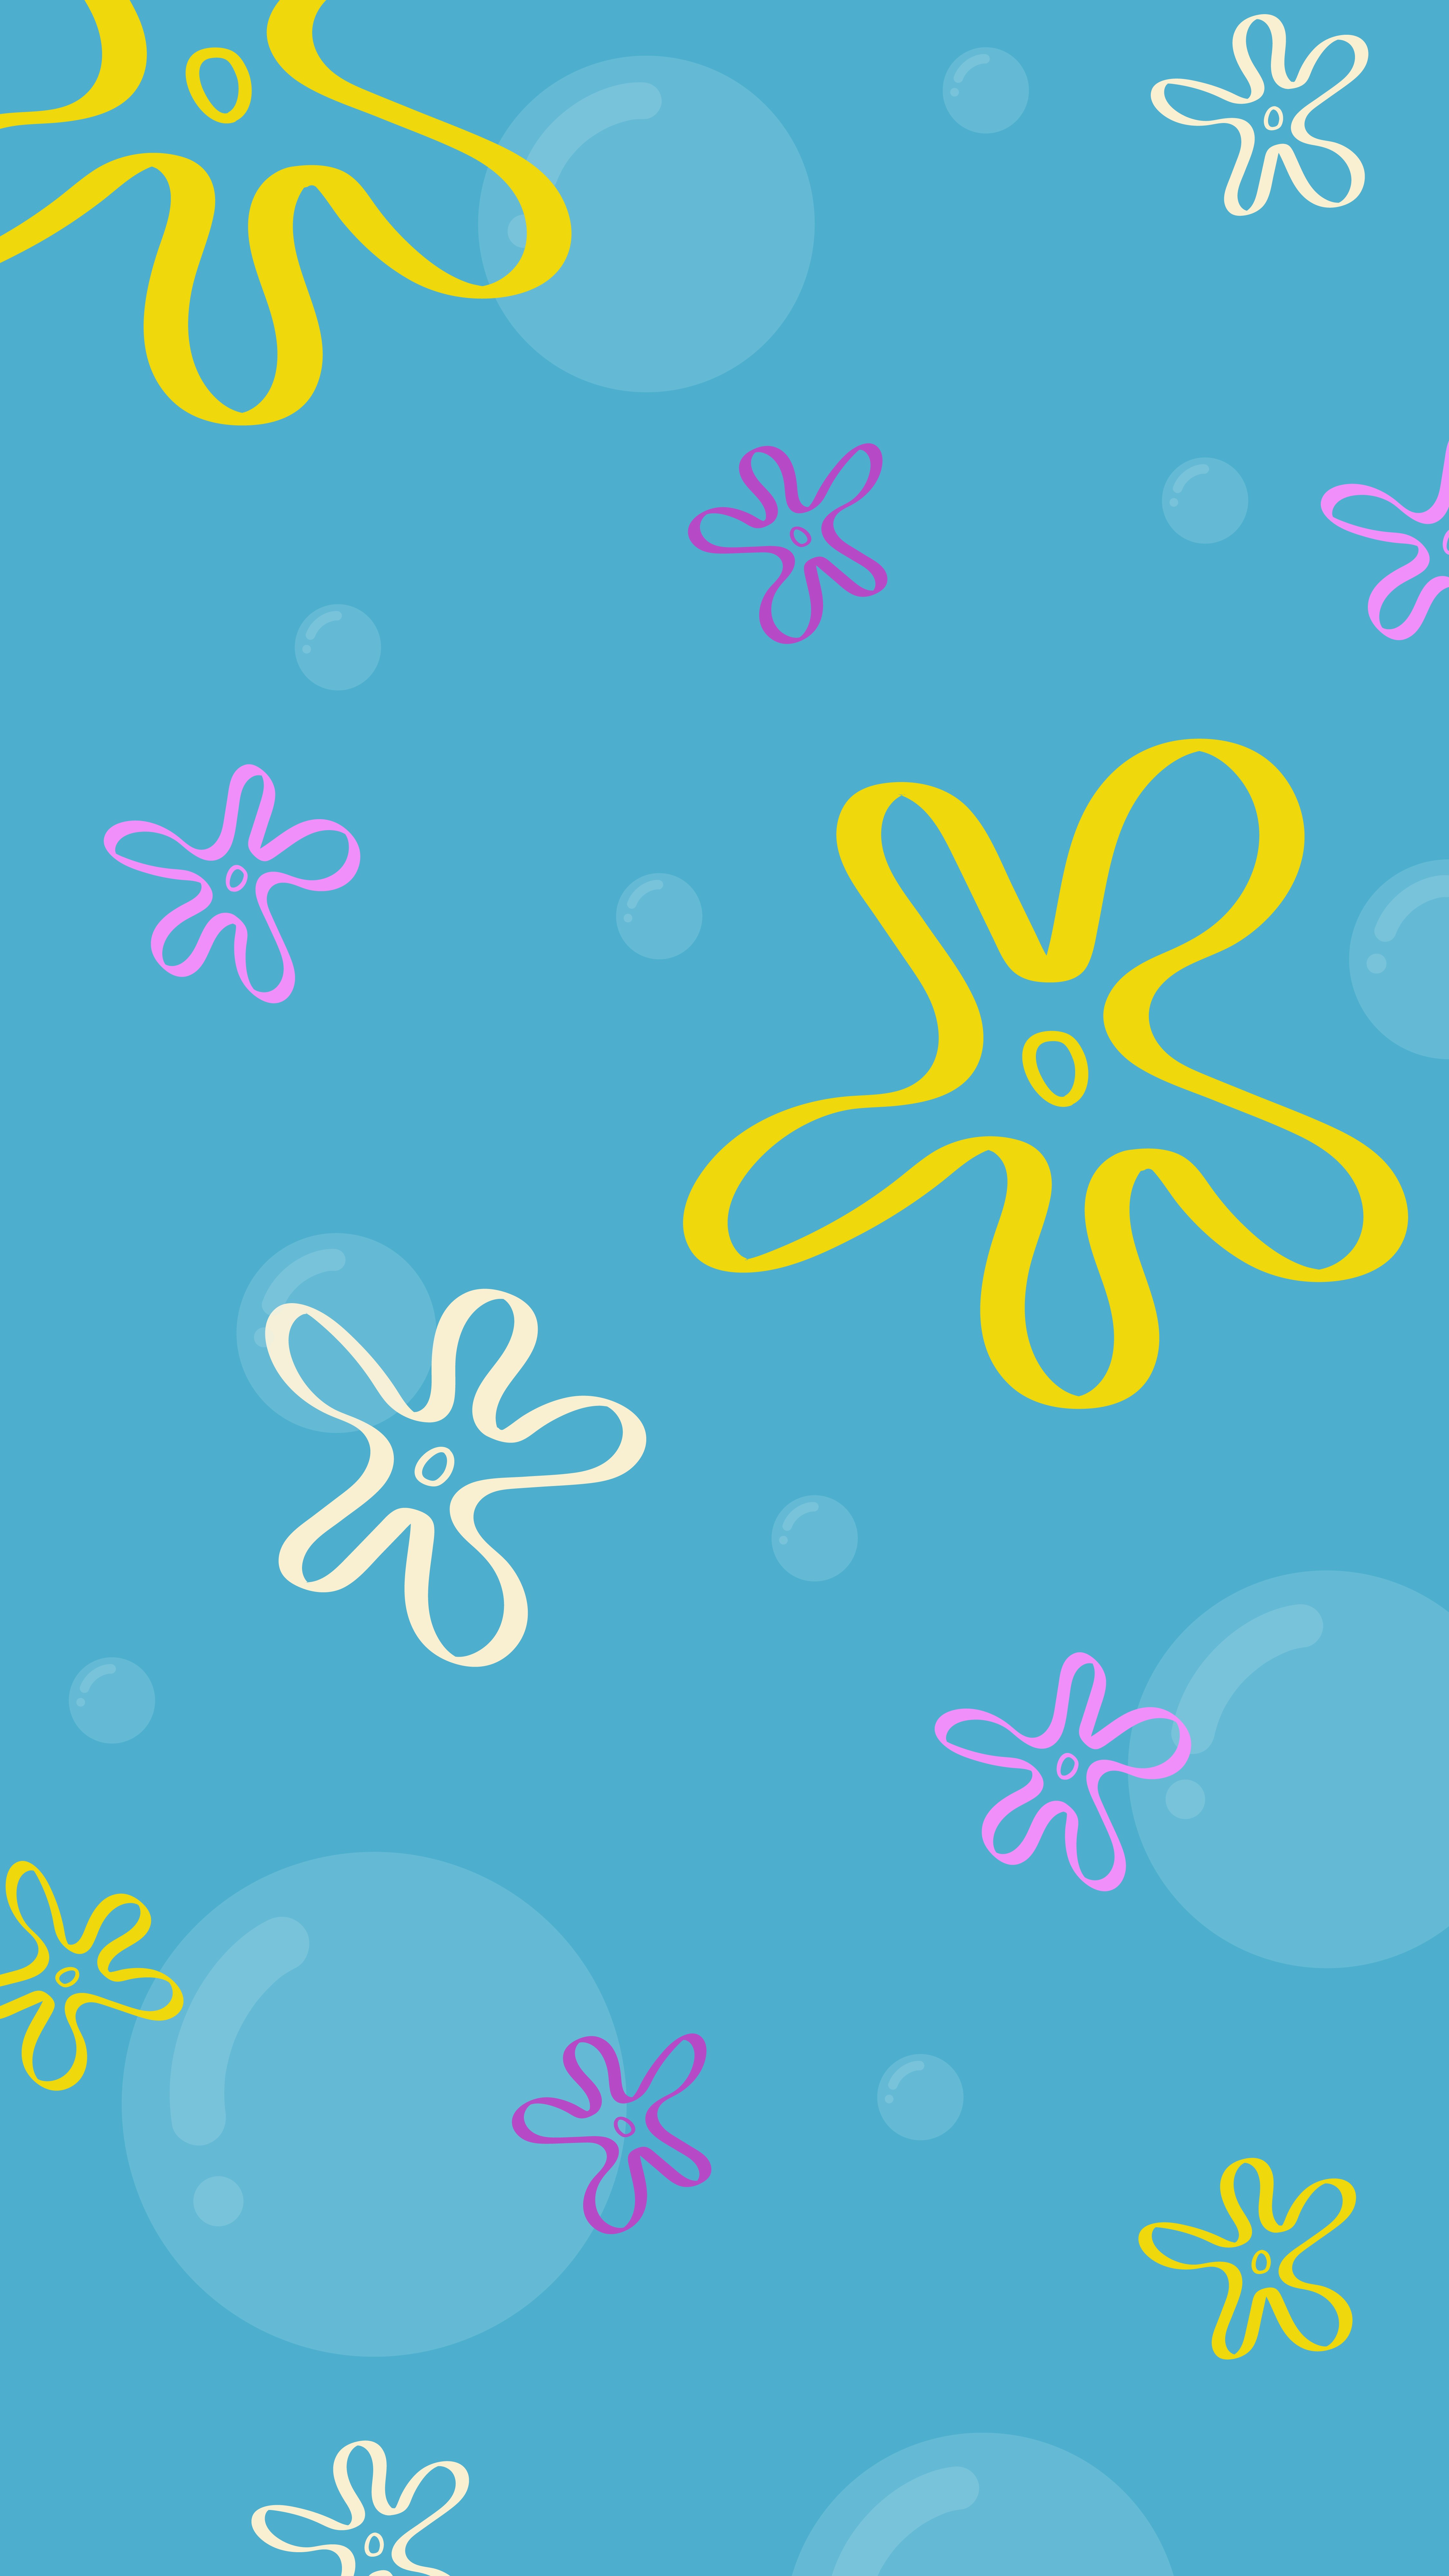 Free Spongebob Flower Background - EPS, Illustrator, JPG, PNG, SVG